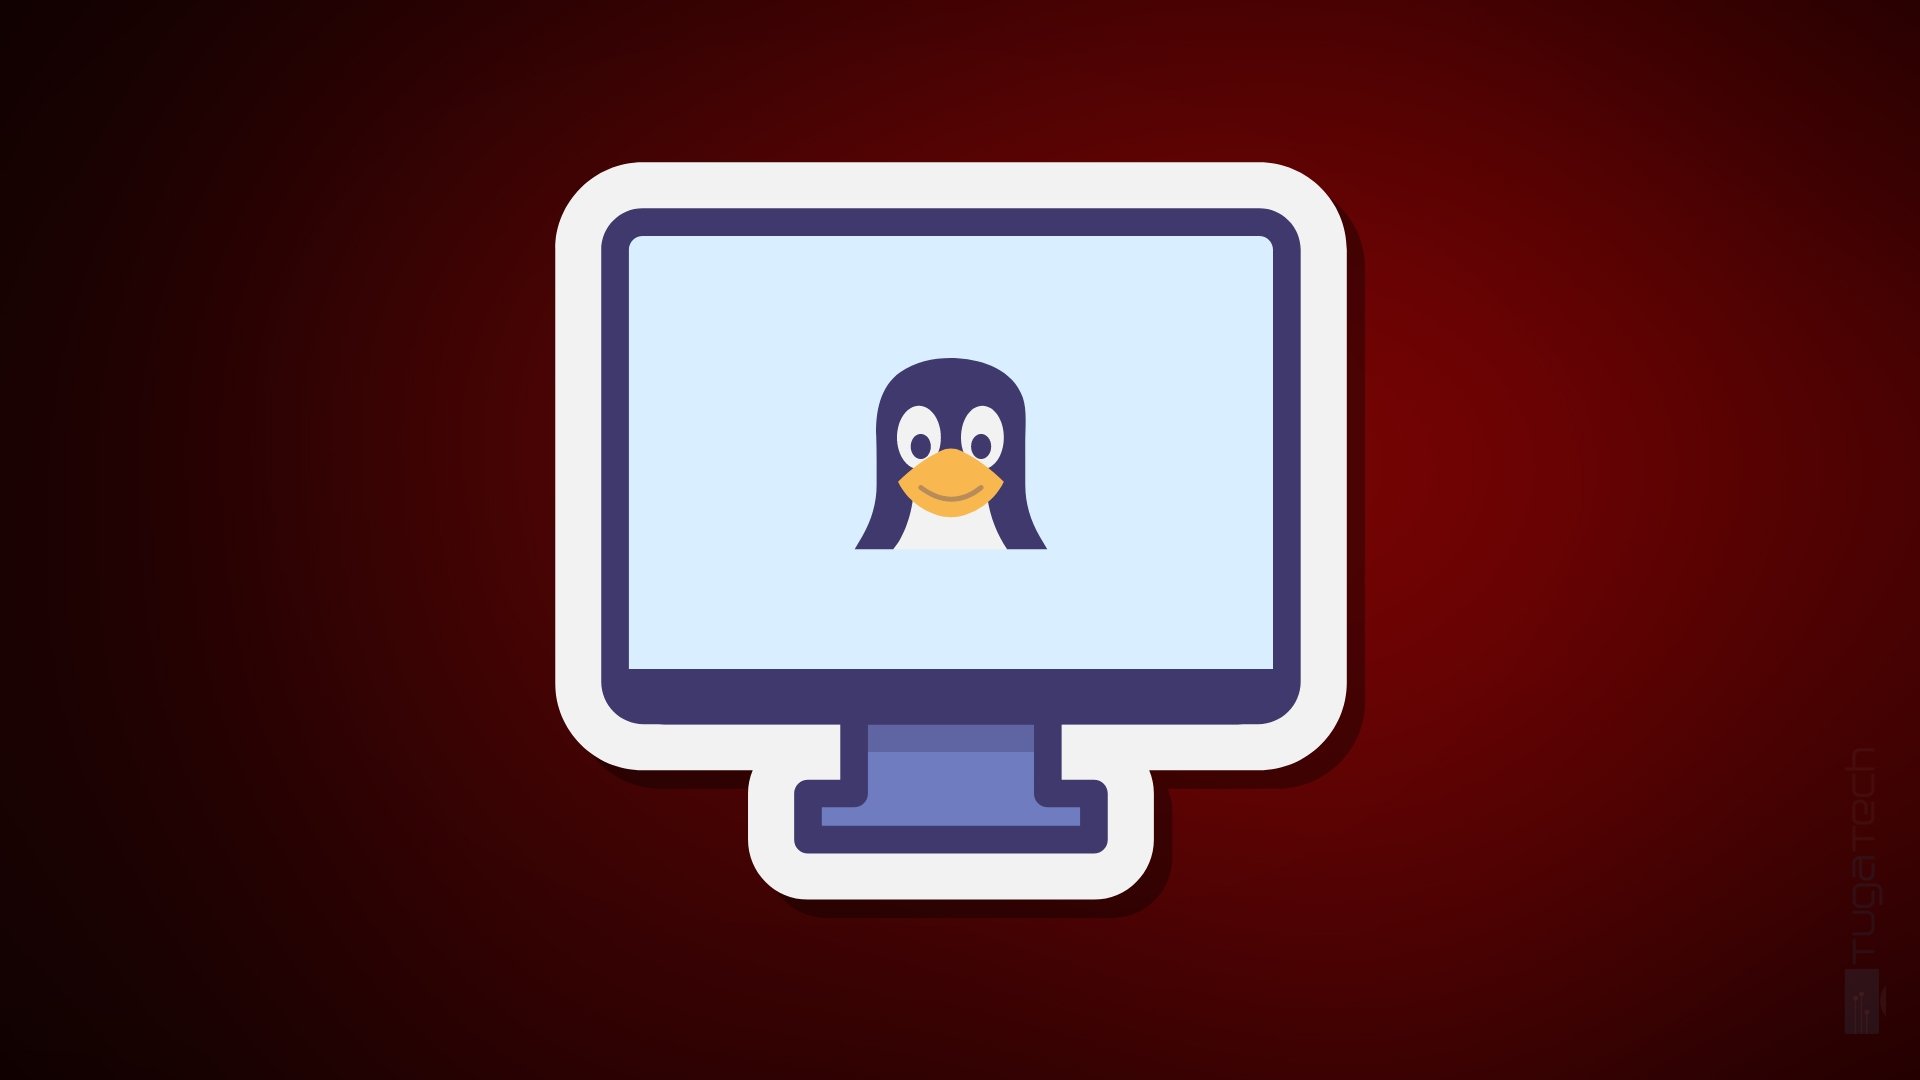 Linux logo do sistema